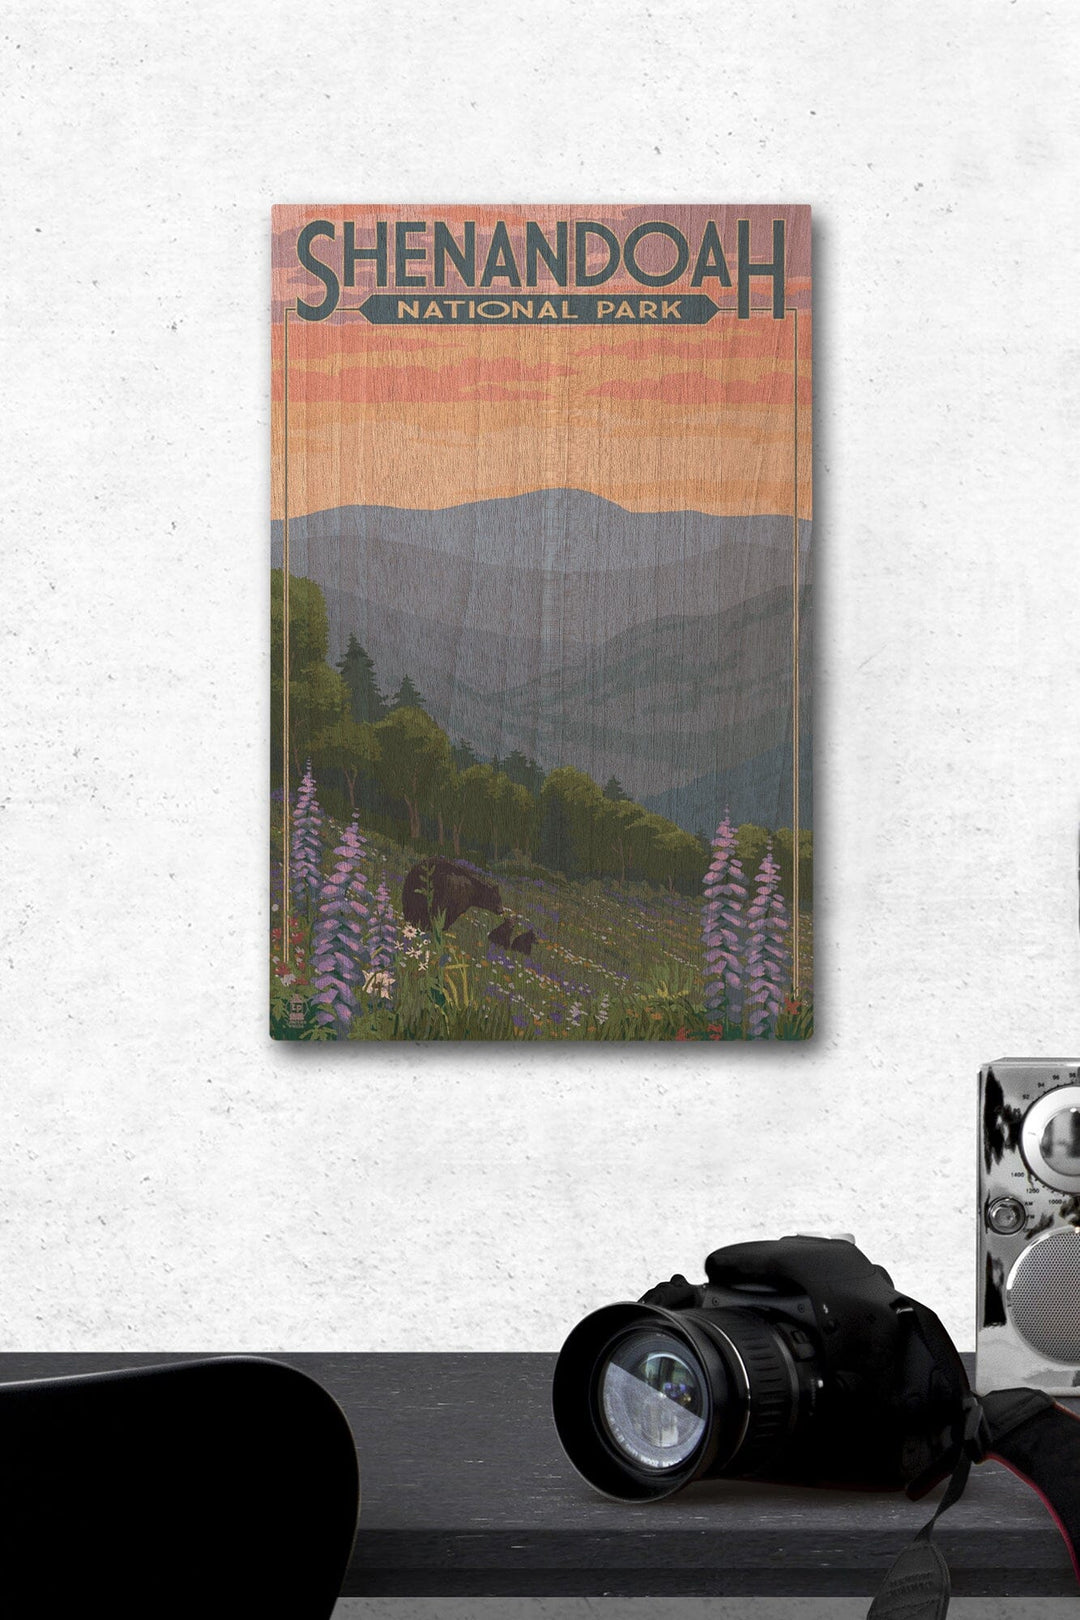 Shenandoah National Park, Virginia, Black Bear and Cubs with Flowers, Lantern Press Artwork, Wood Signs and Postcards Wood Lantern Press 12 x 18 Wood Gallery Print 